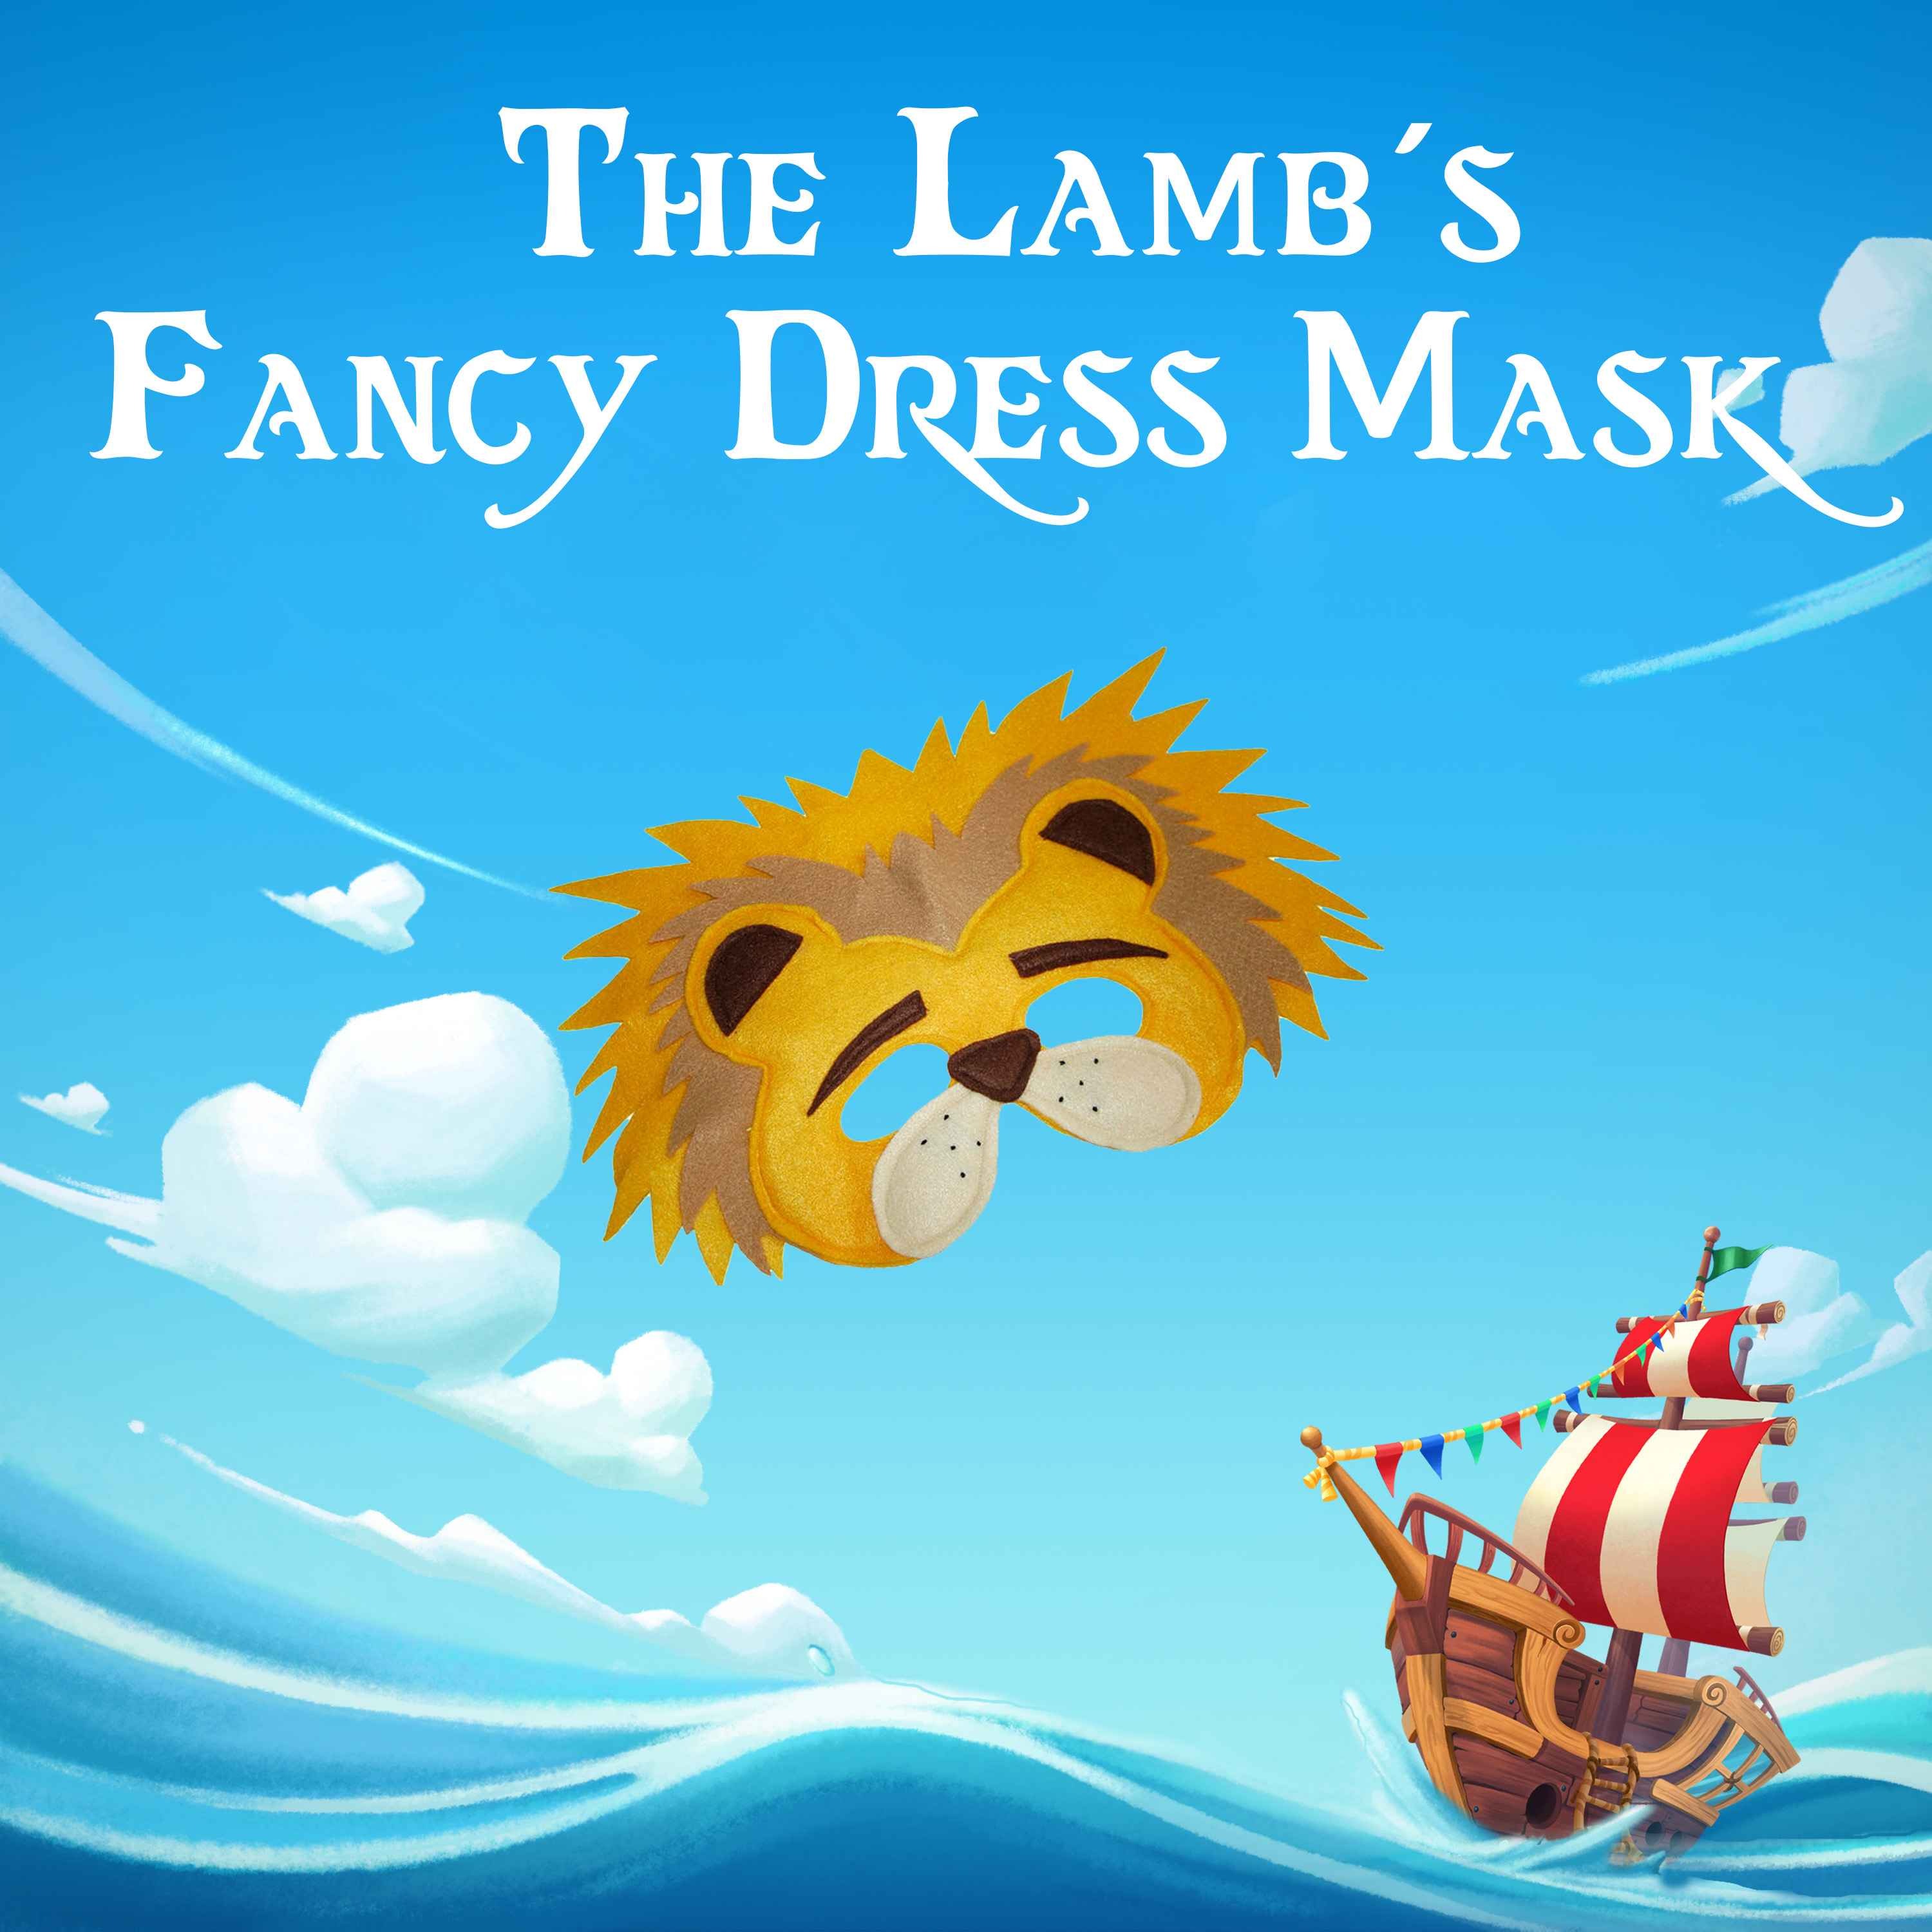 The Lamb’s Fancy Dress Mask